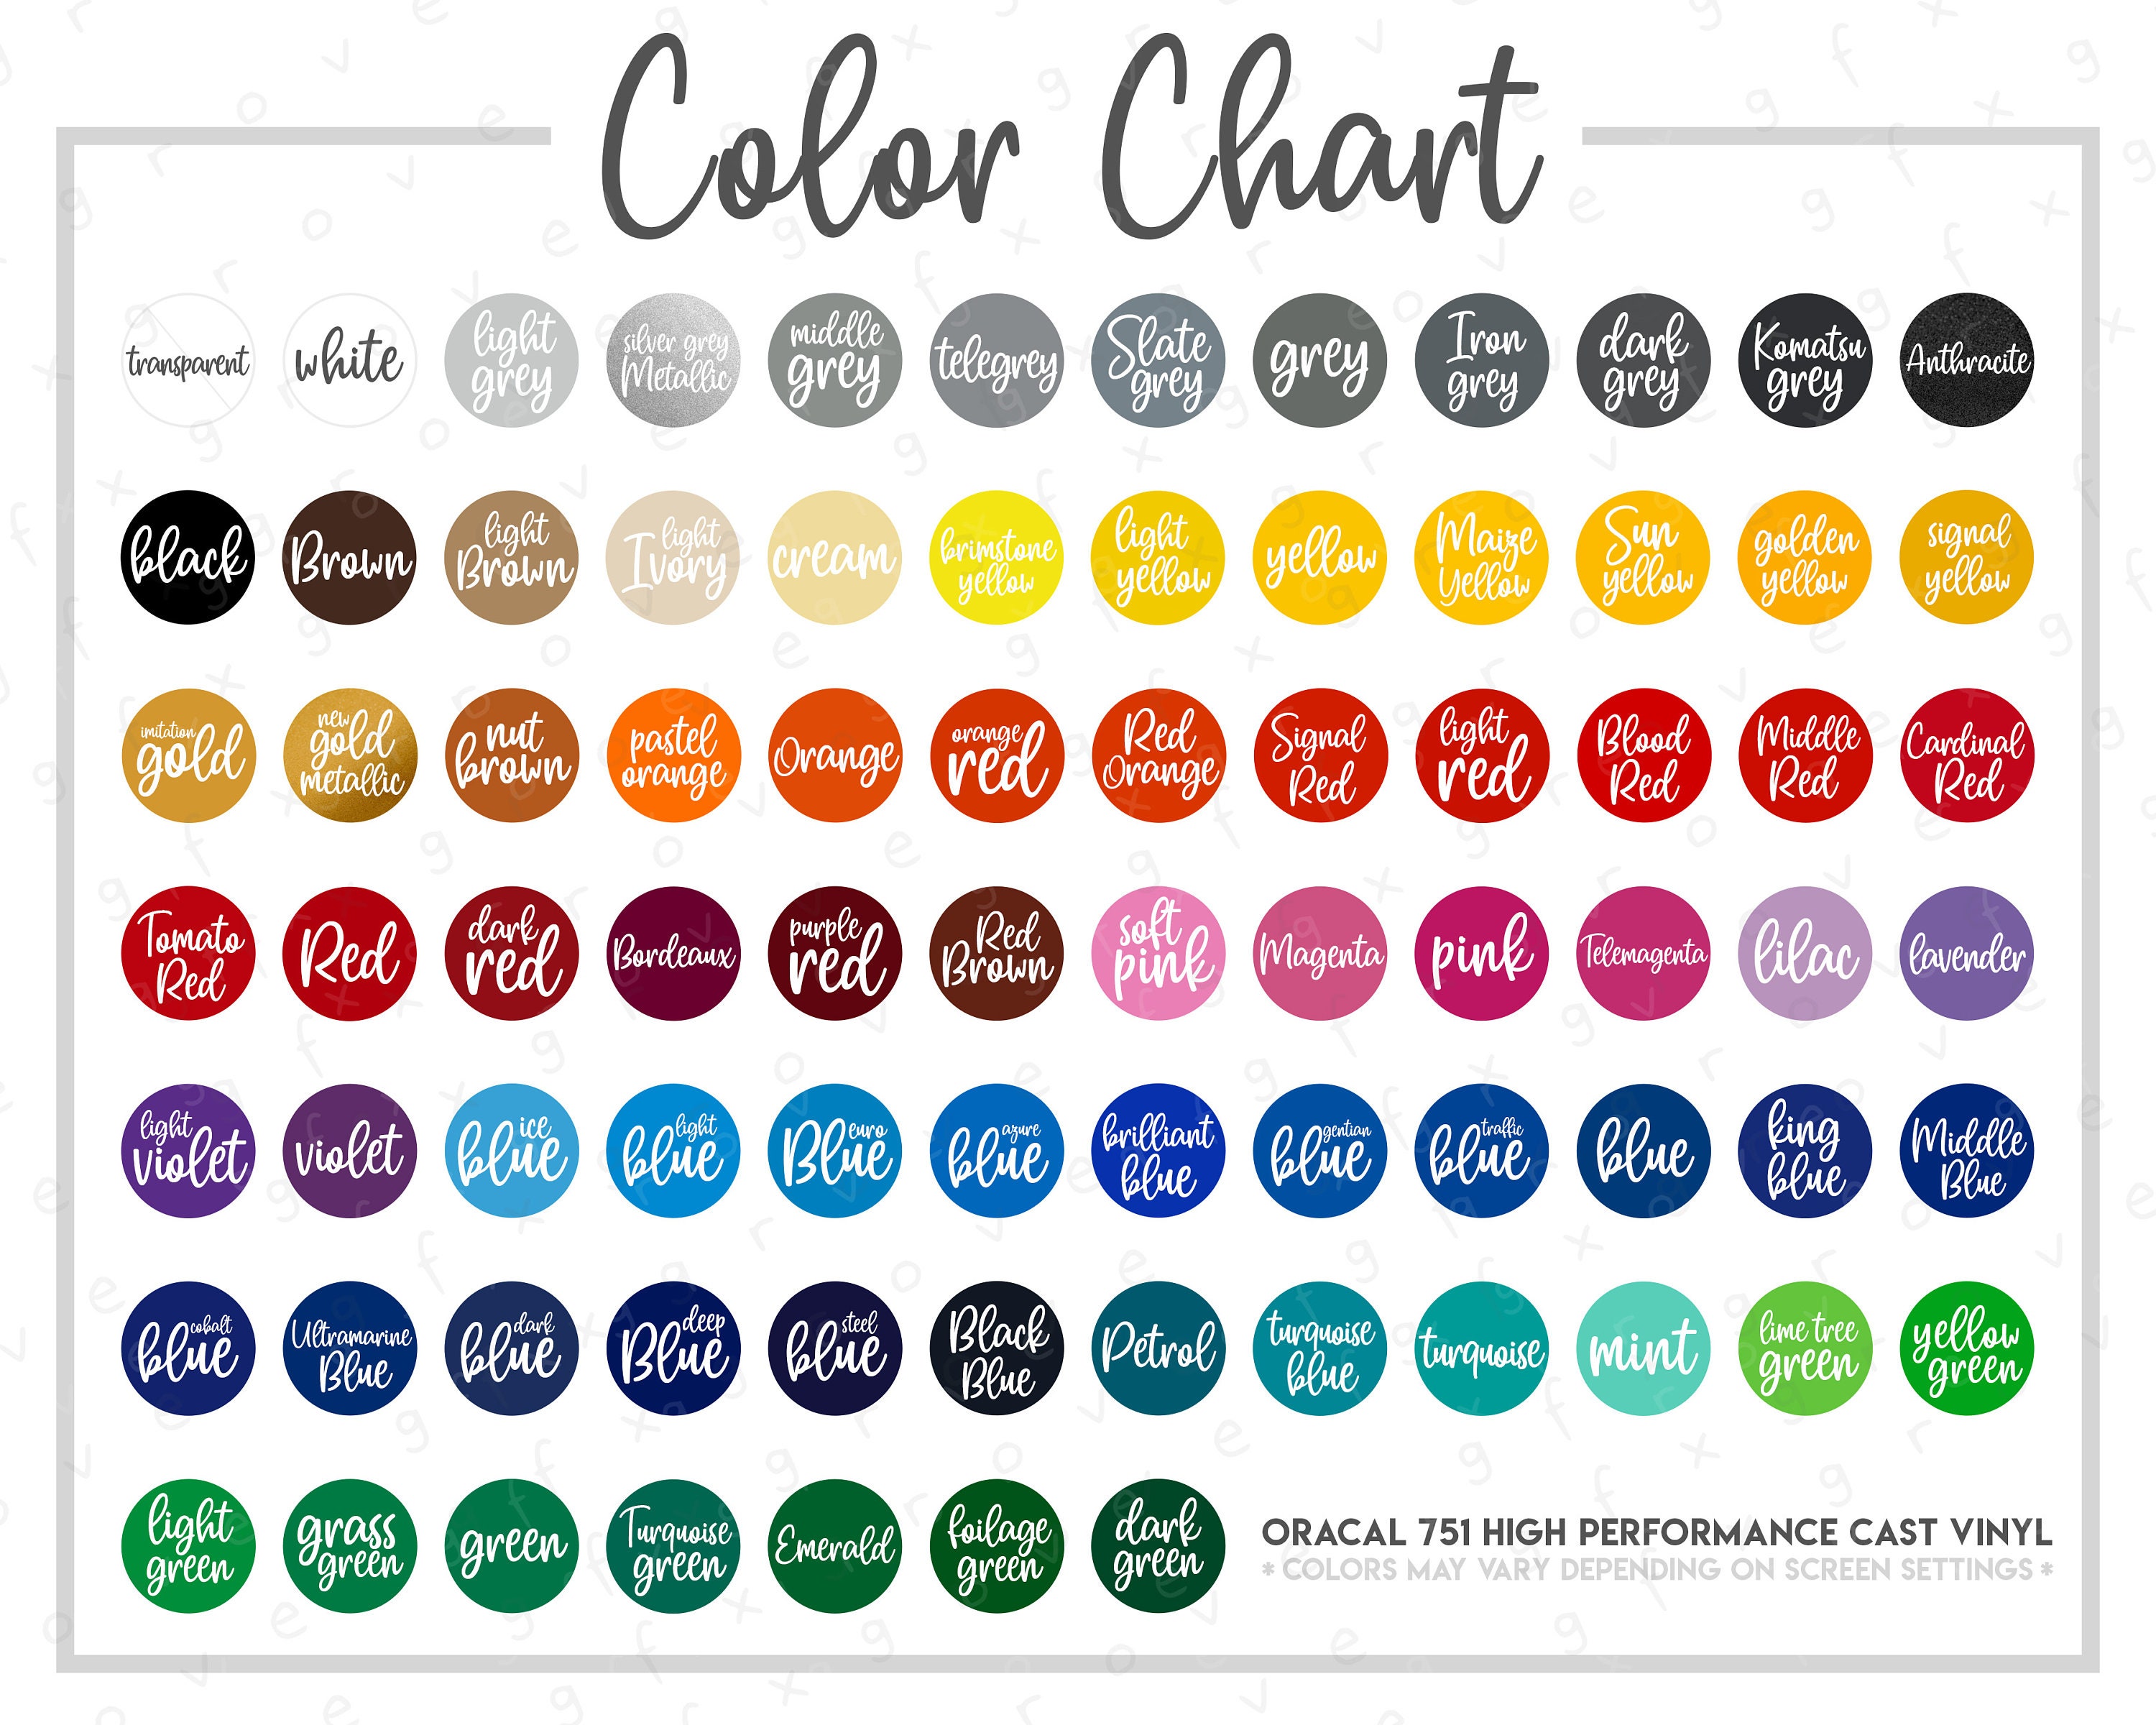 Oracal 751 Vinyl Color Chart 79 COLORS Semi-Editable PSD | Etsy